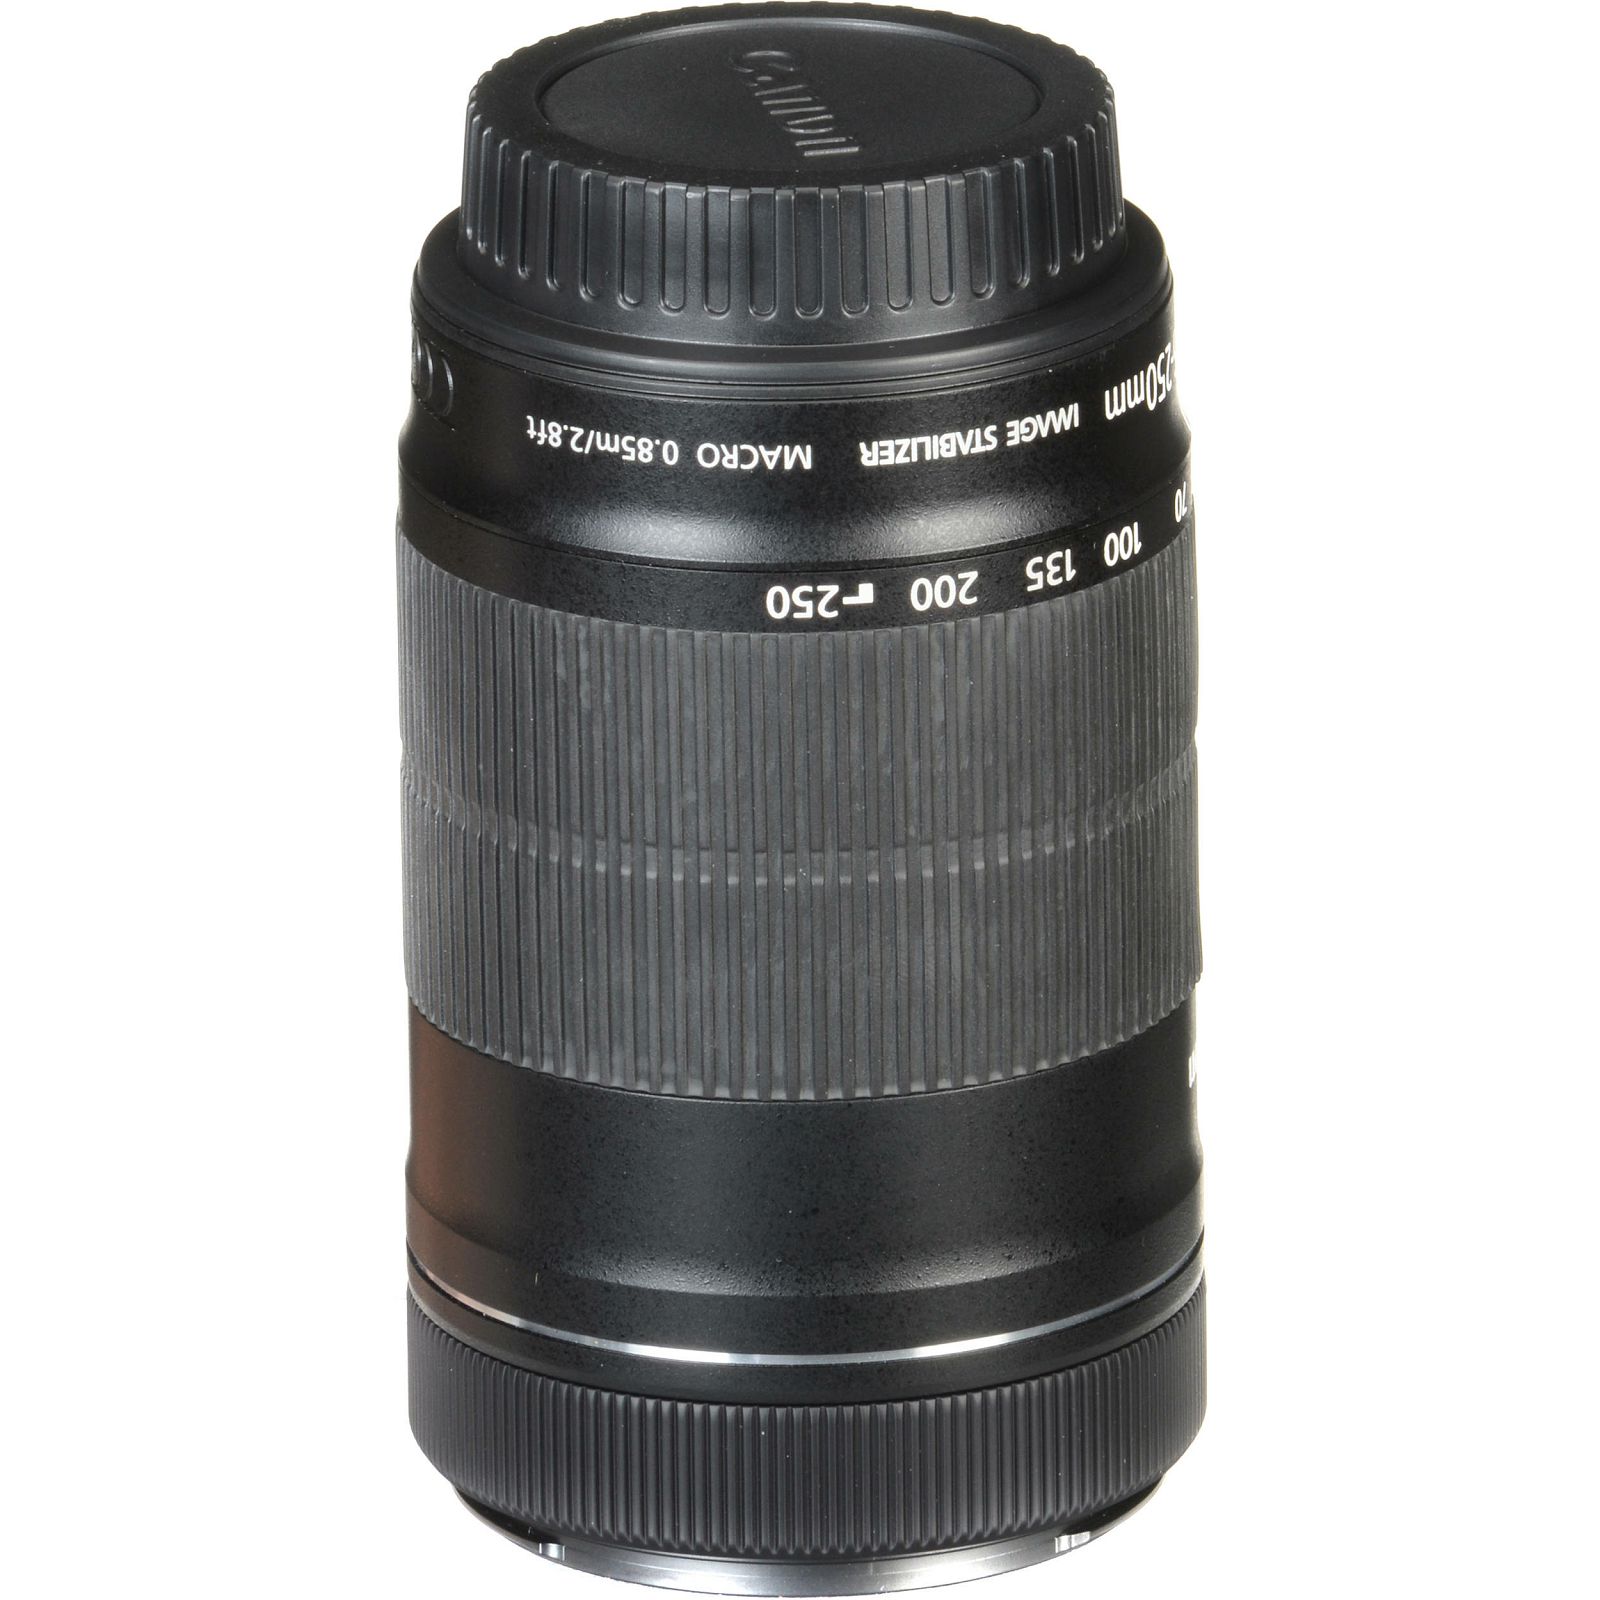 Canon EF-S 55-250 IS STM telefoto objektiv zoom lens 55-250mm 4-5.6 f/4-5.6 (8546B005AA) (bulk)